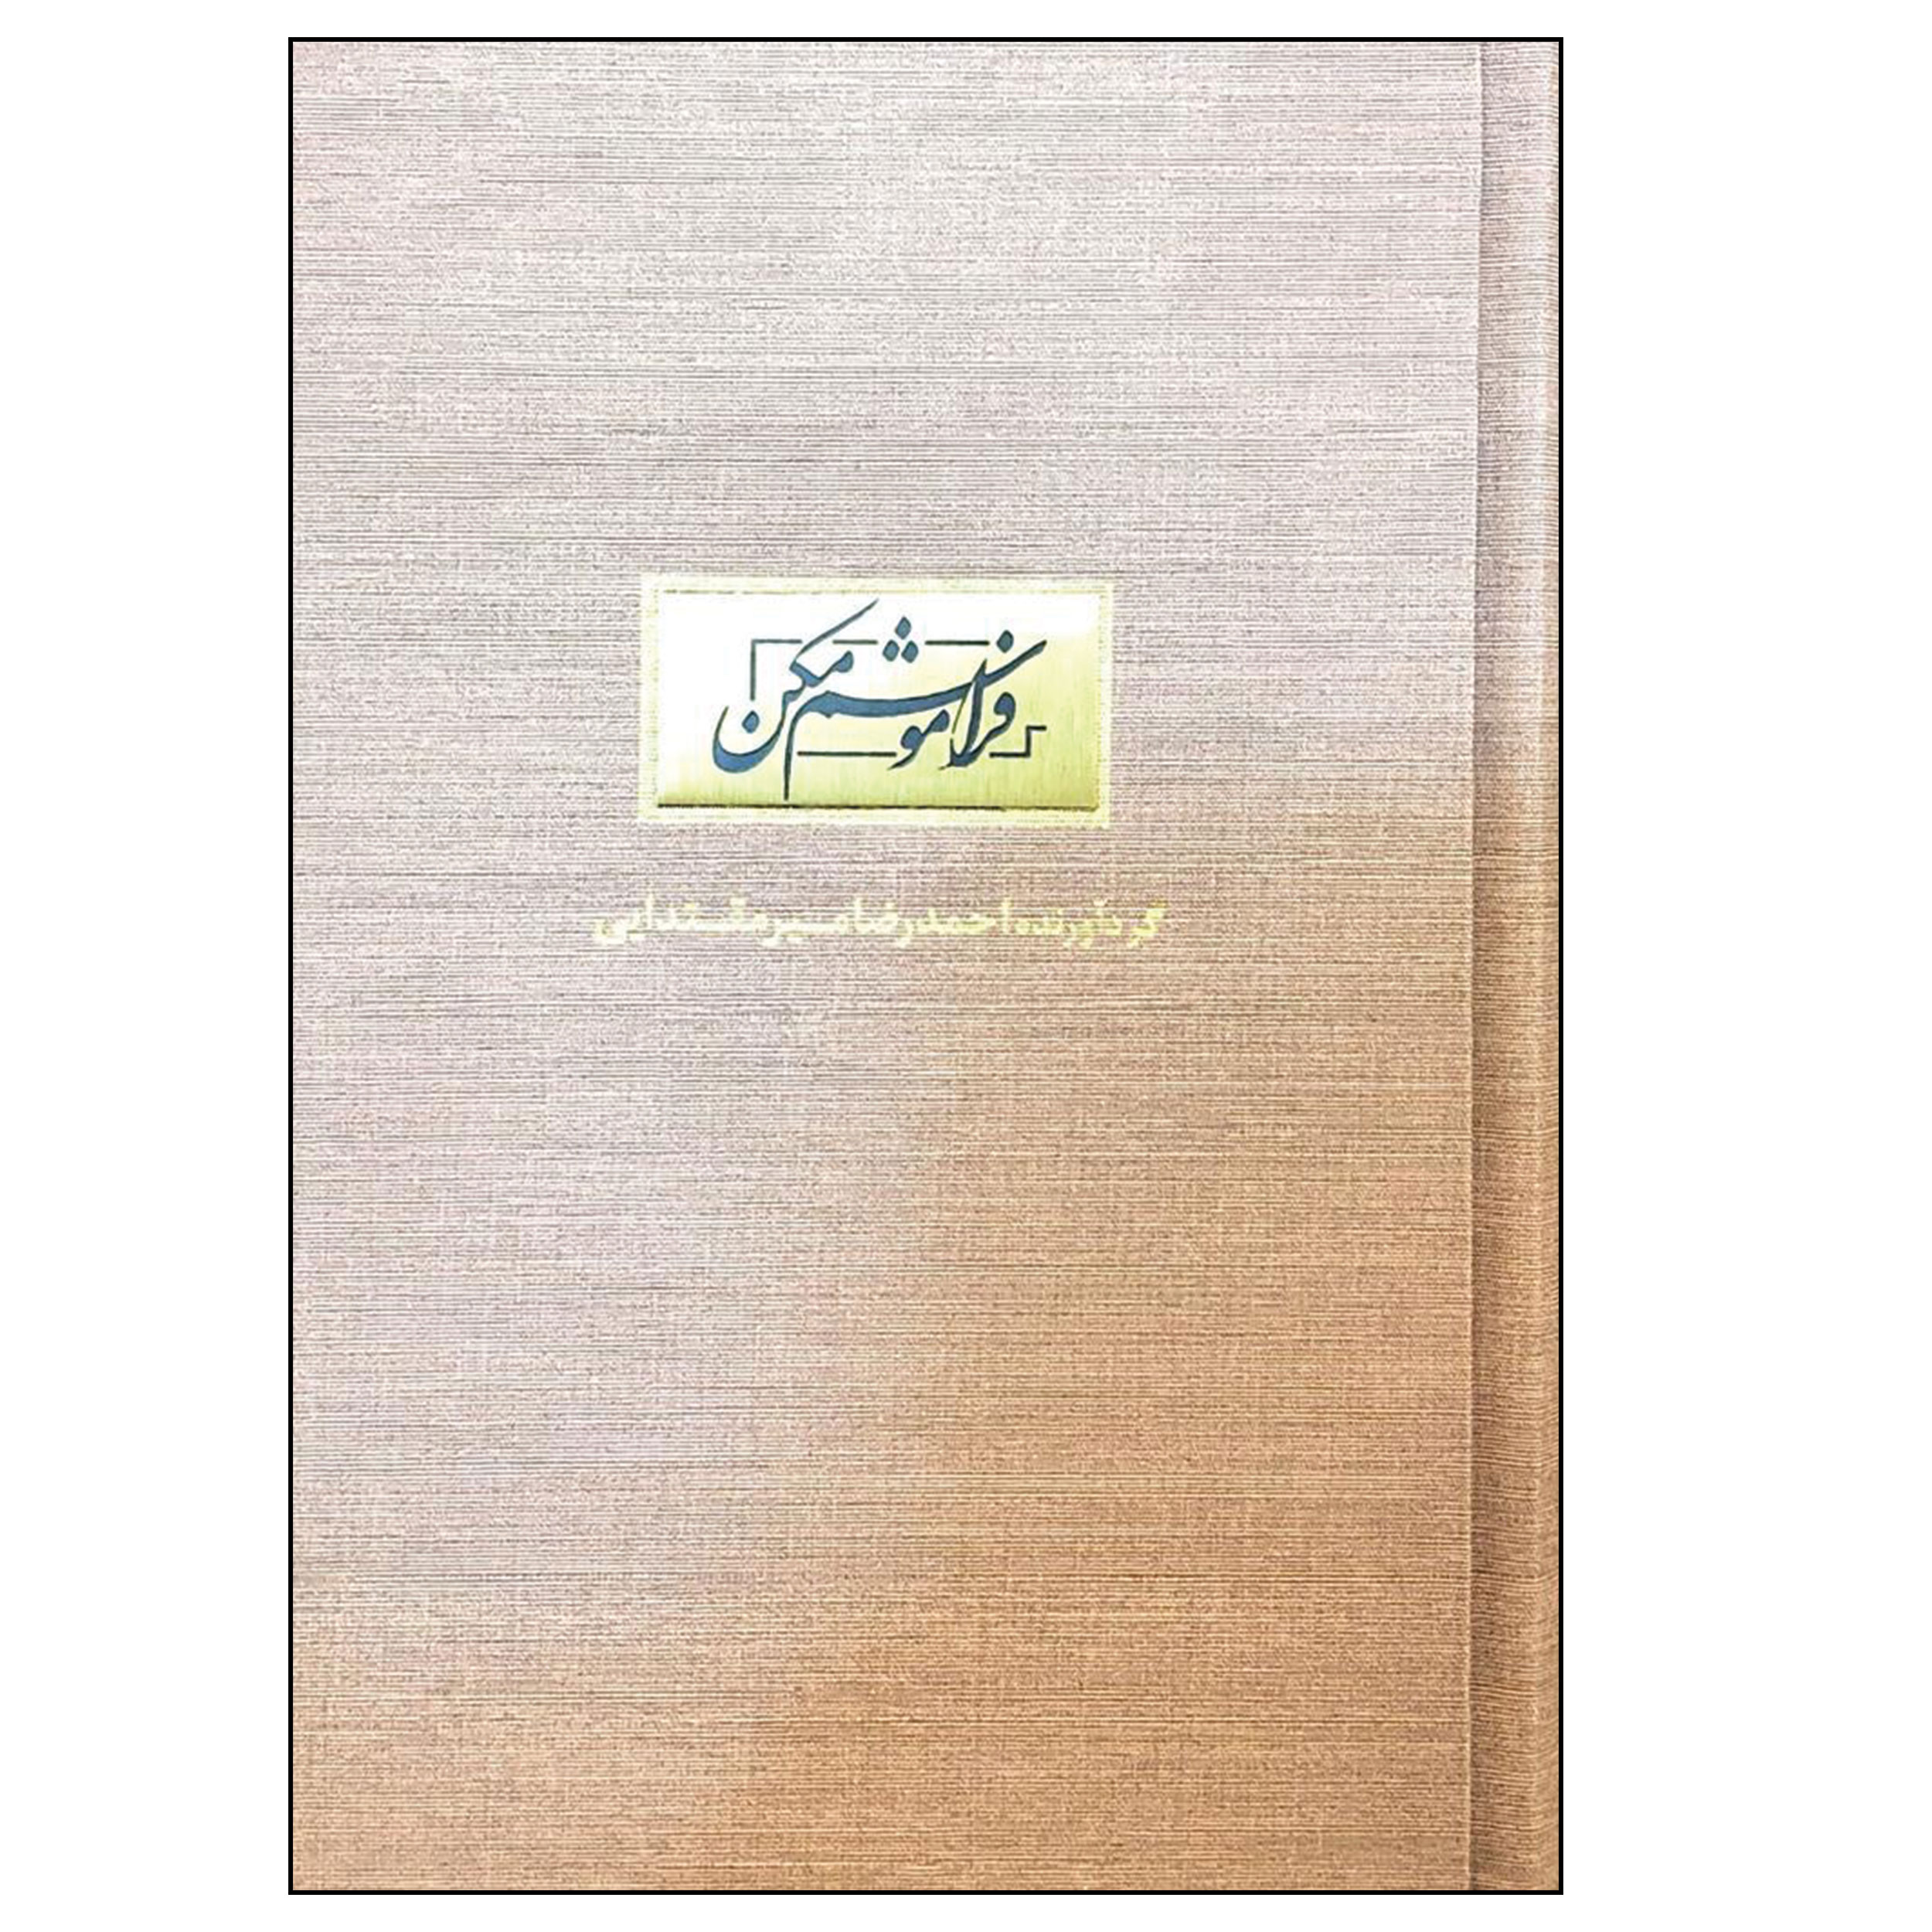 کتاب فراموشم مکن اثر احمد رضا میرمقتدایی نشر آبان 